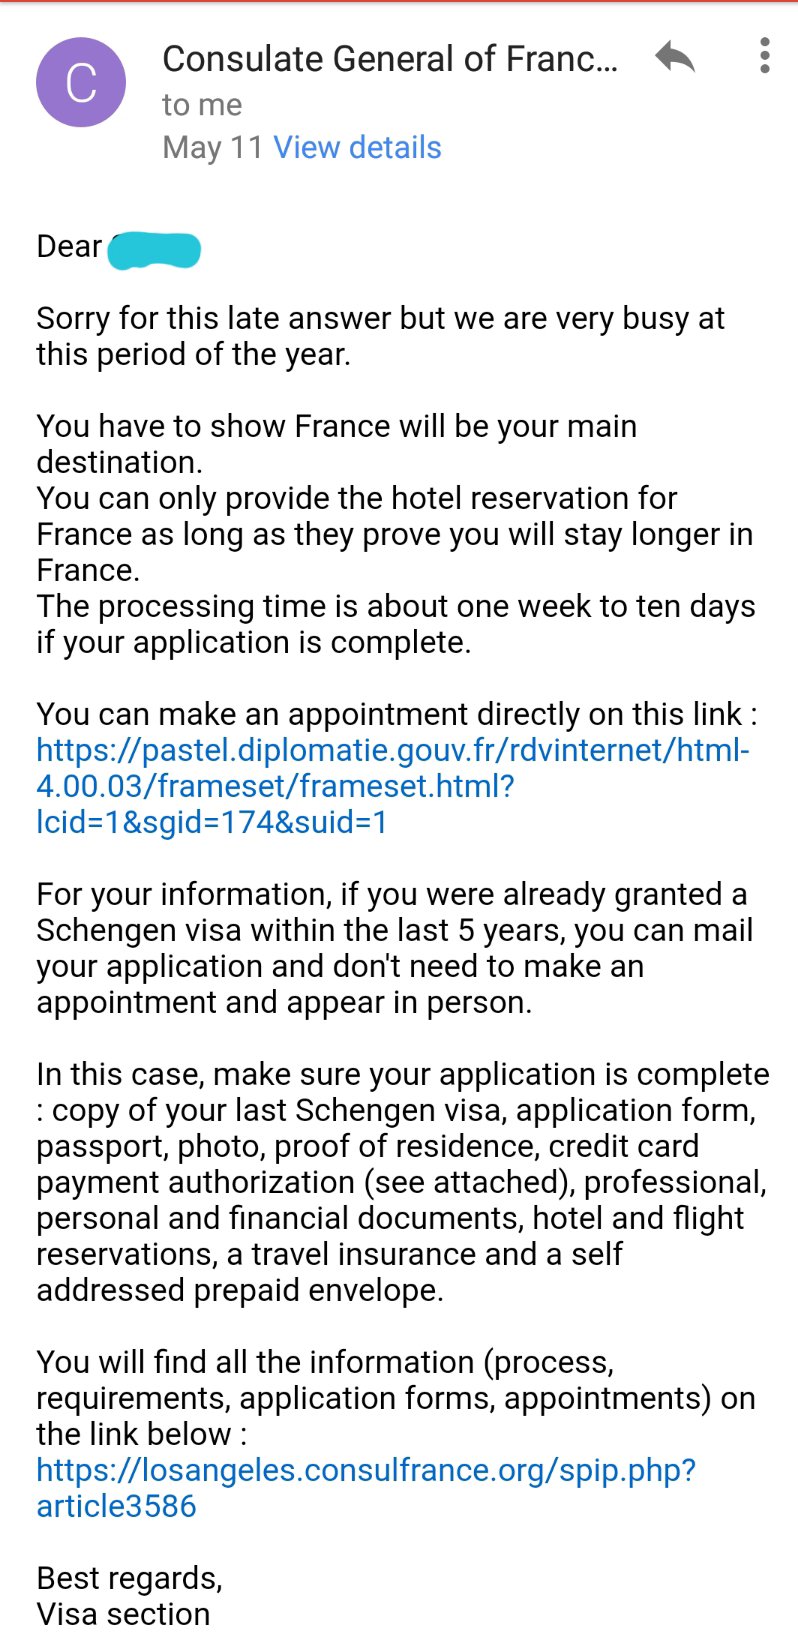 Applying for a Schengen visa (Part I)